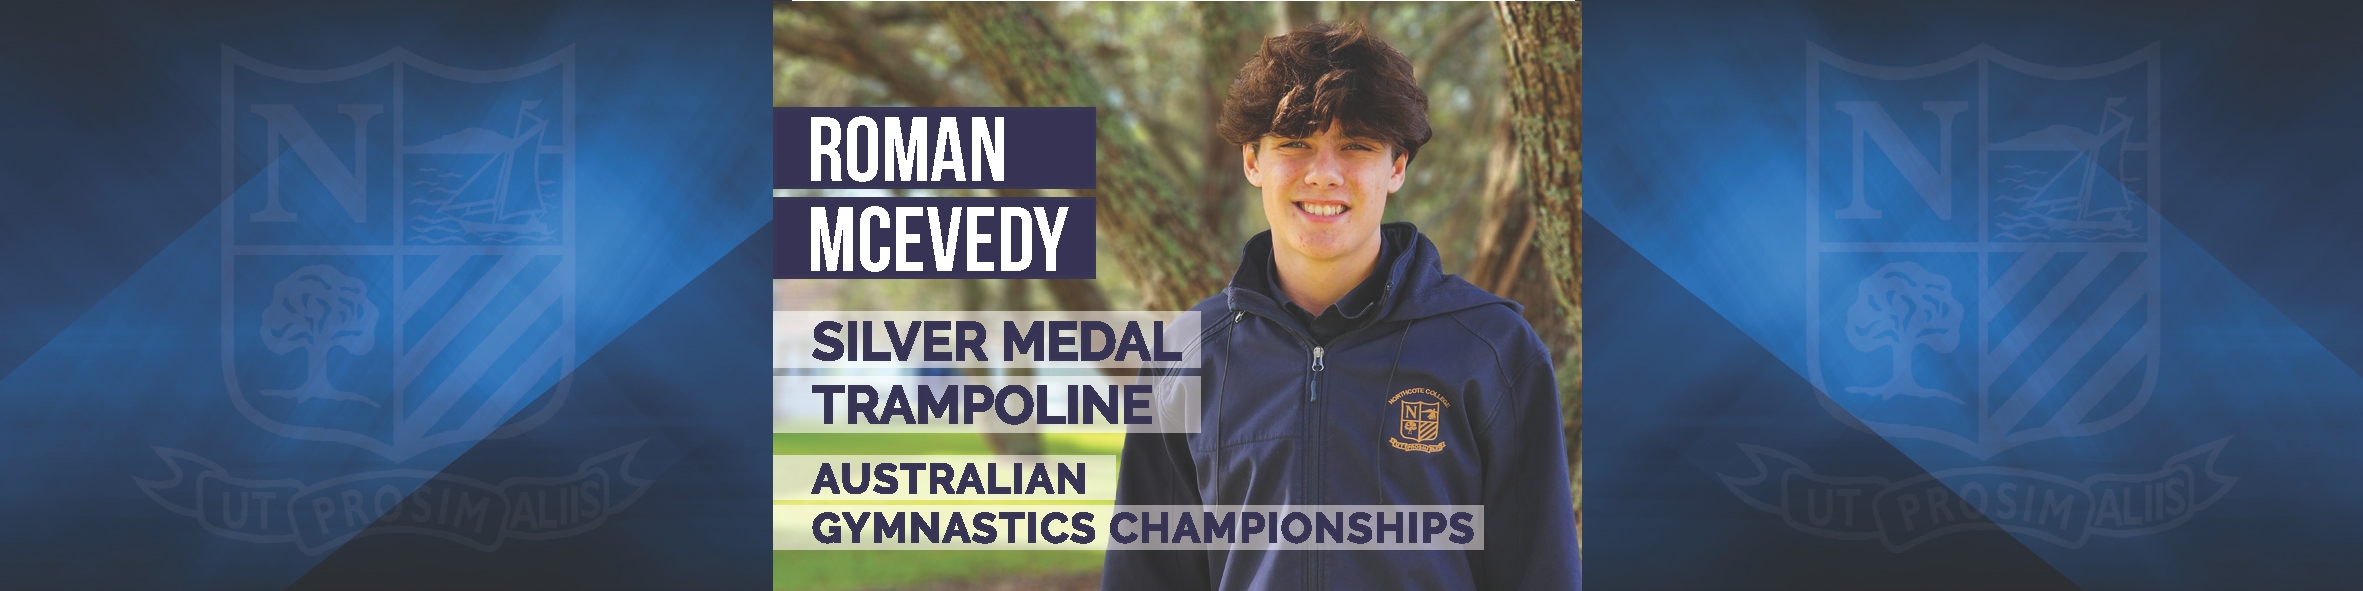 roman mcevedy trampolining silver medal